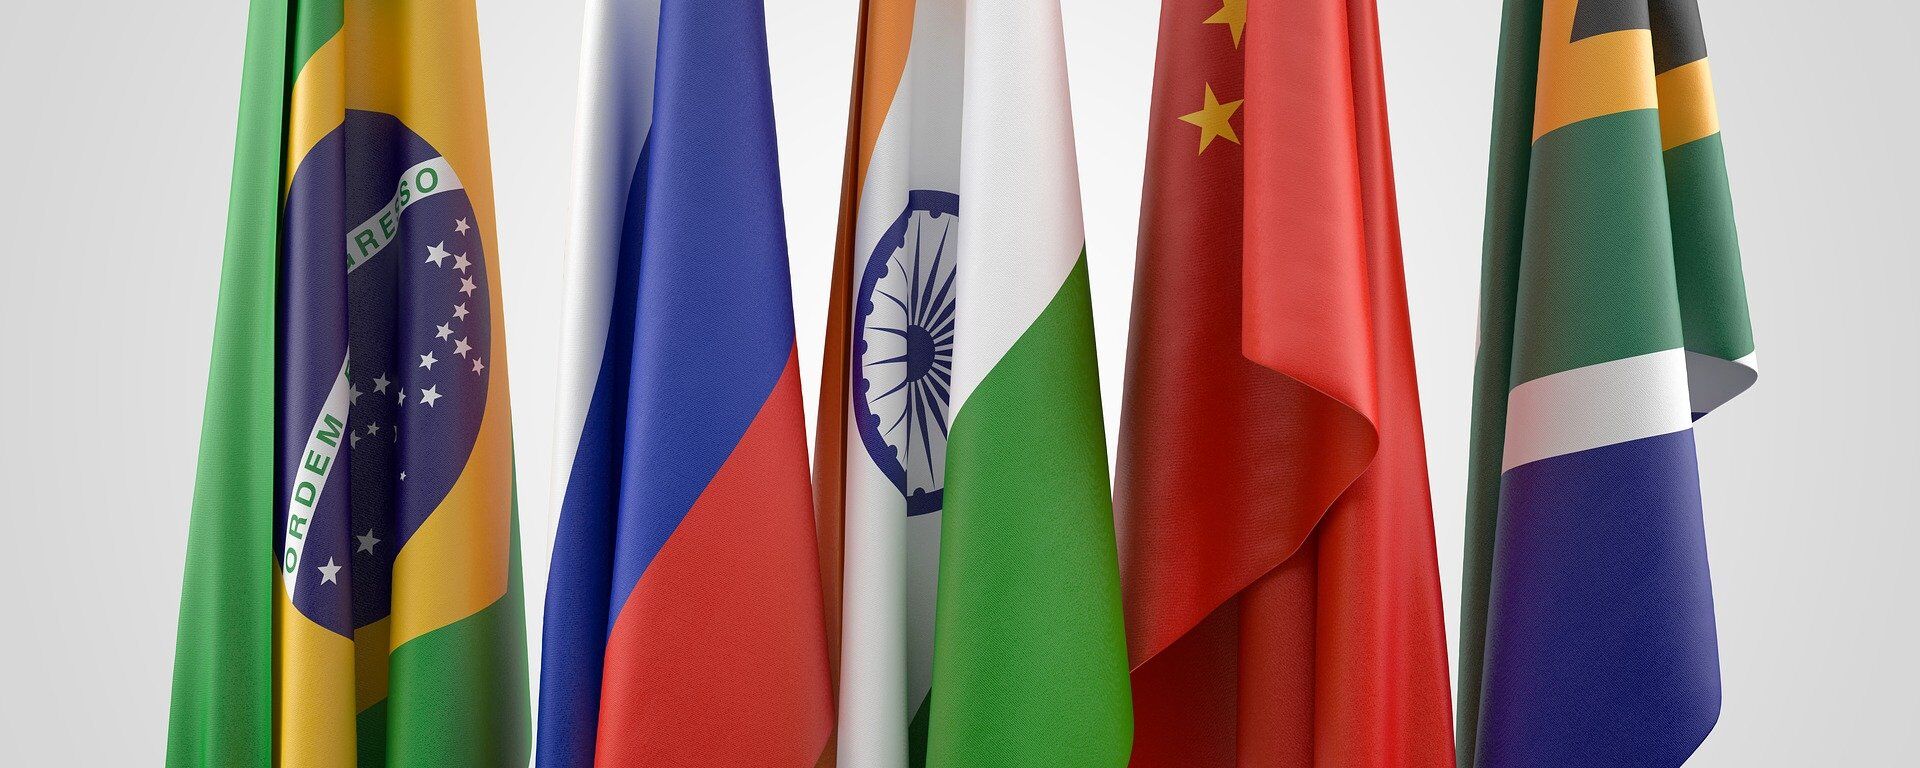 Banderas de los países BRICS: Brasil, Rusia, India, China y Sudáfrica - Sputnik Mundo, 1920, 24.05.2022